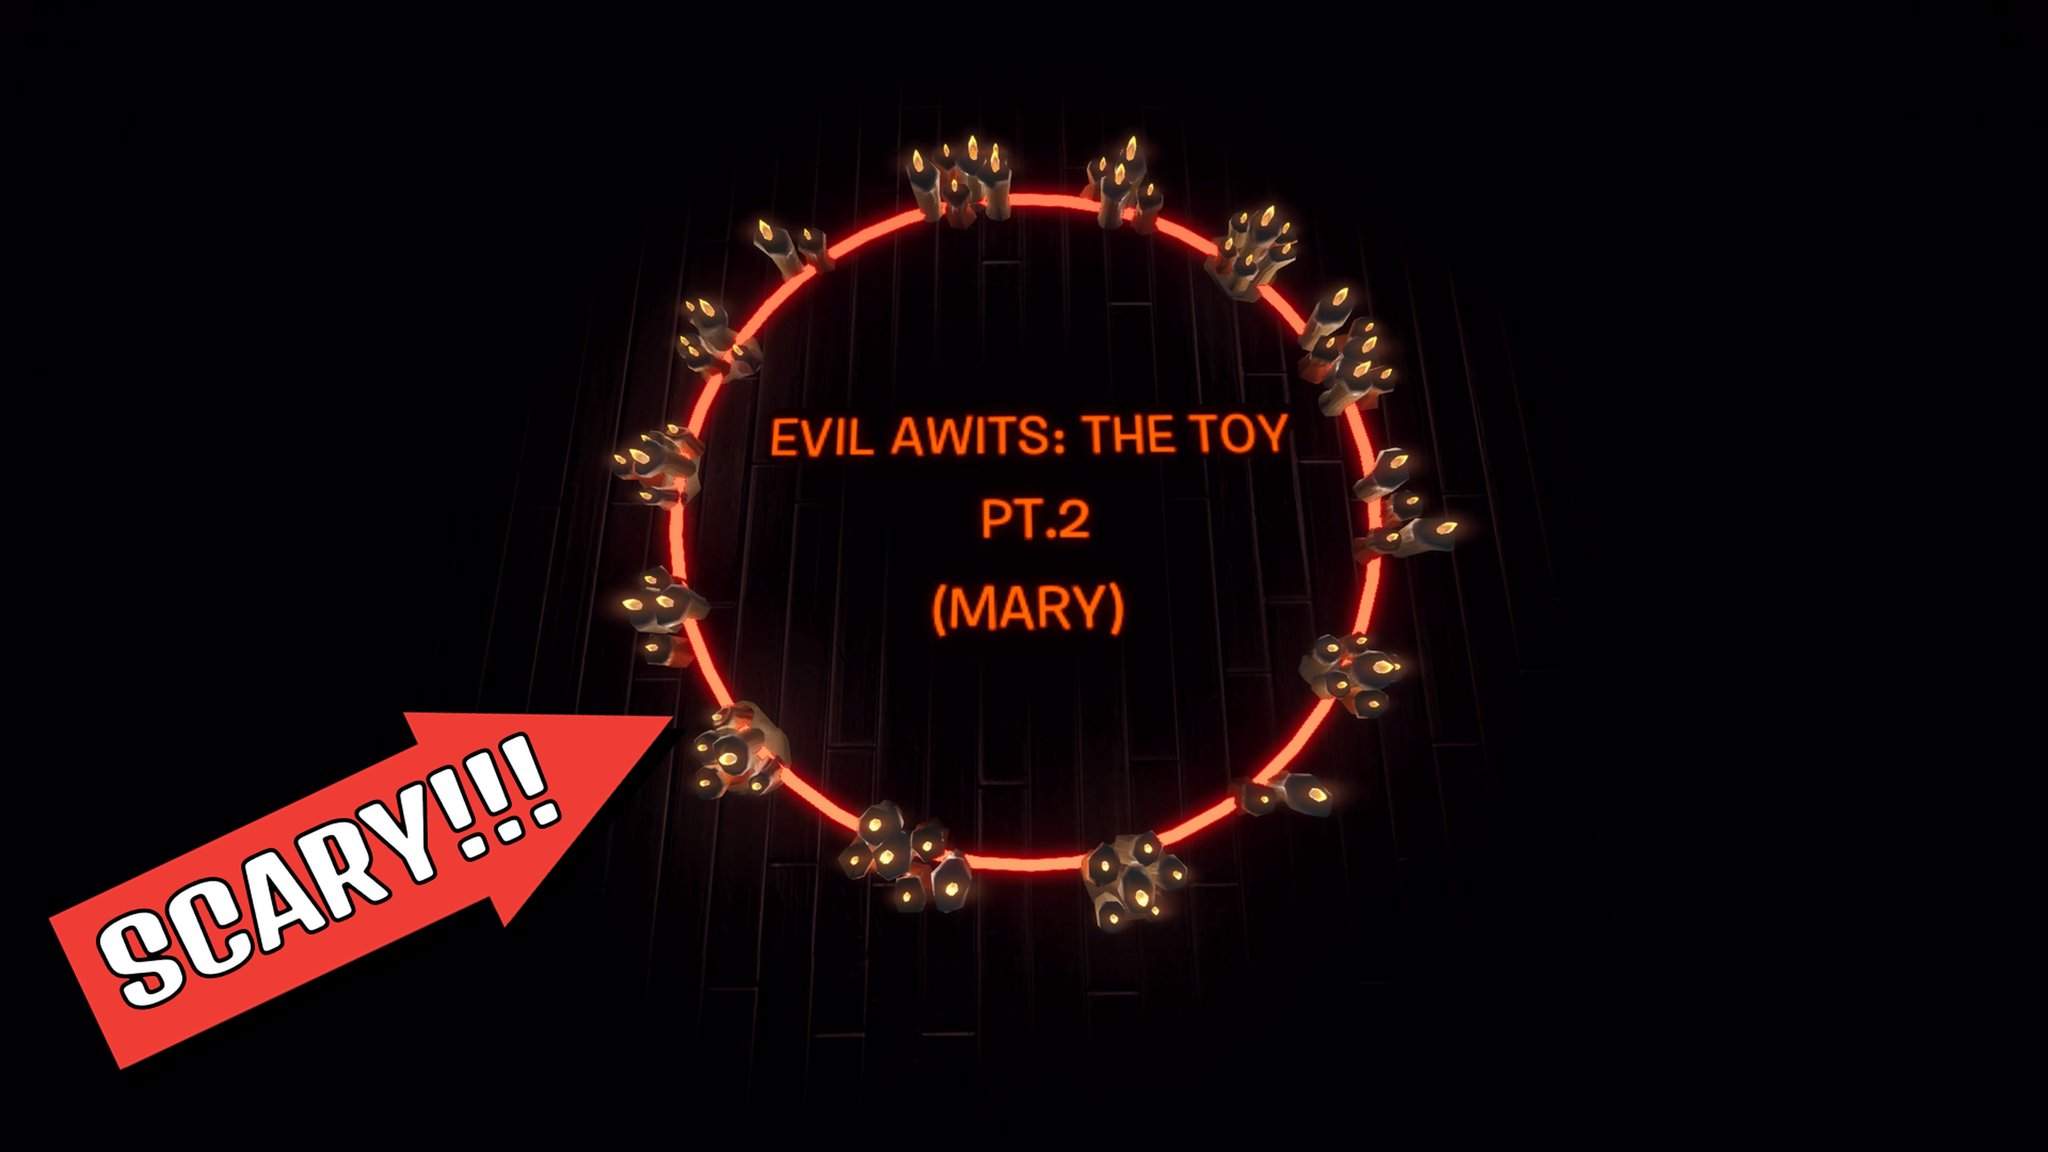 EVIL 18 AWAITS: THE TOY PT.2 (MARY)